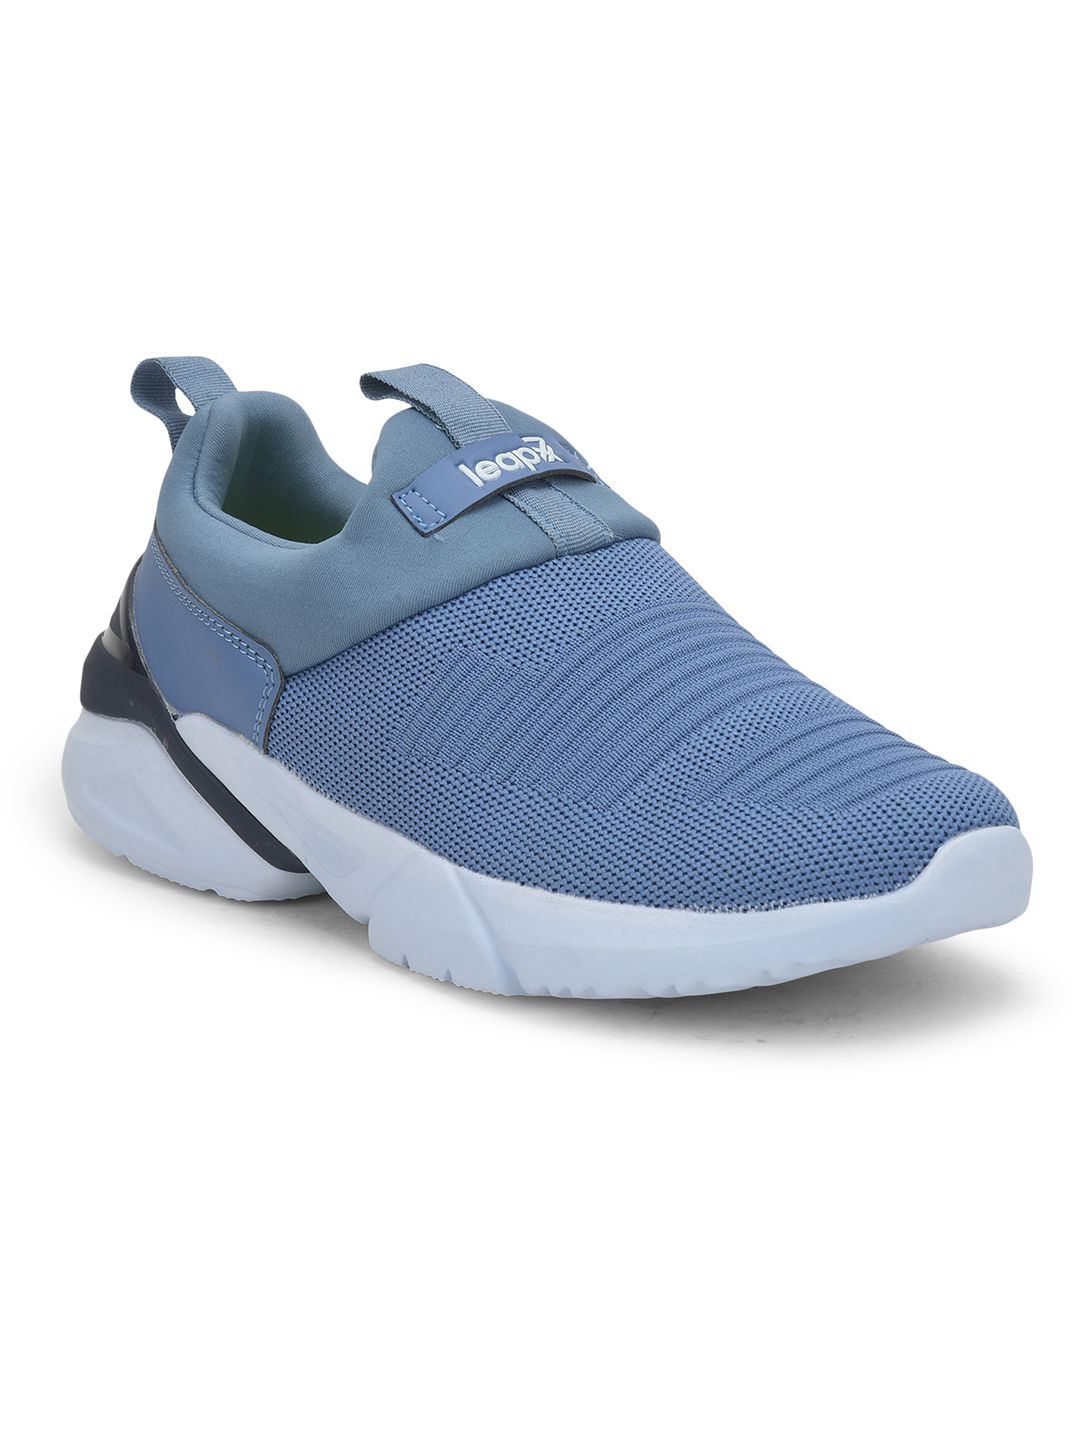 Liberty - Blue Men's Sports Running Shoes